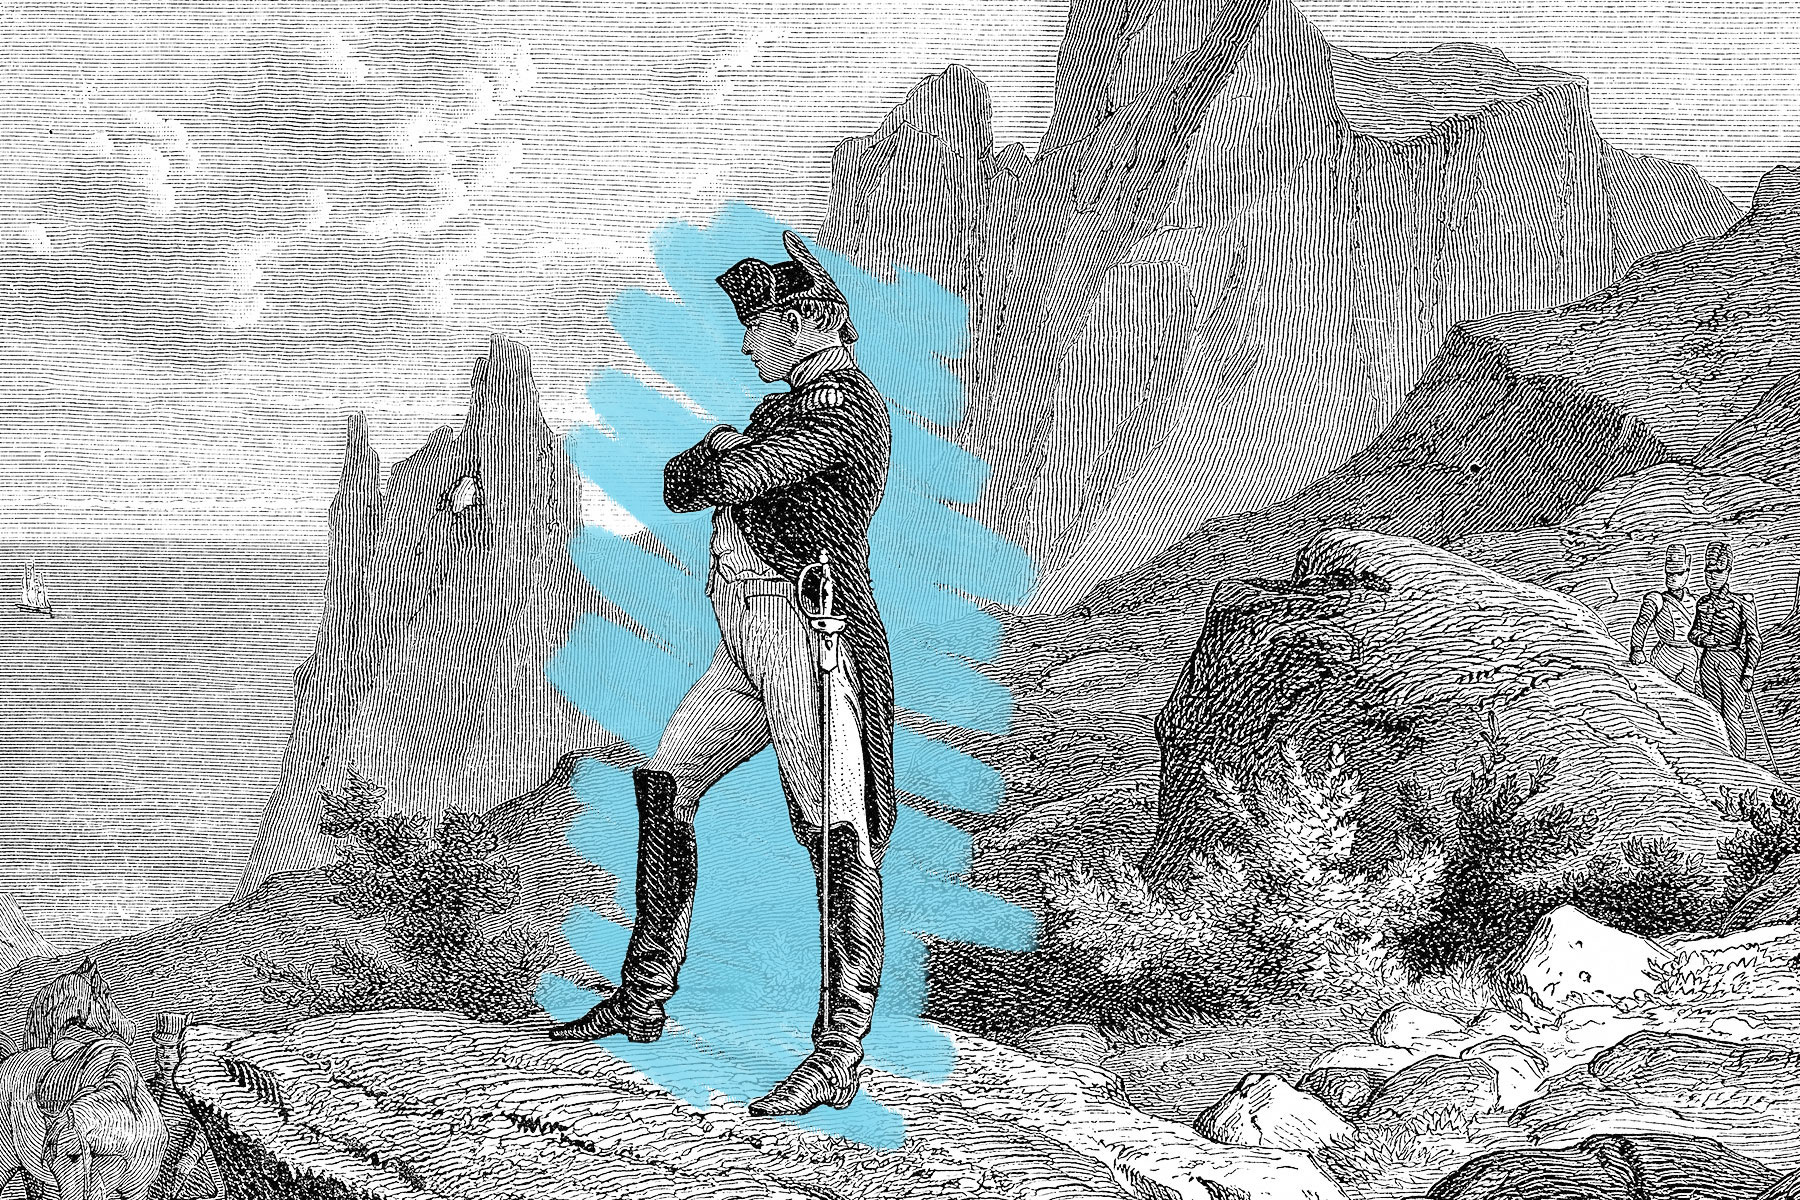 Napoleon at St. Helena